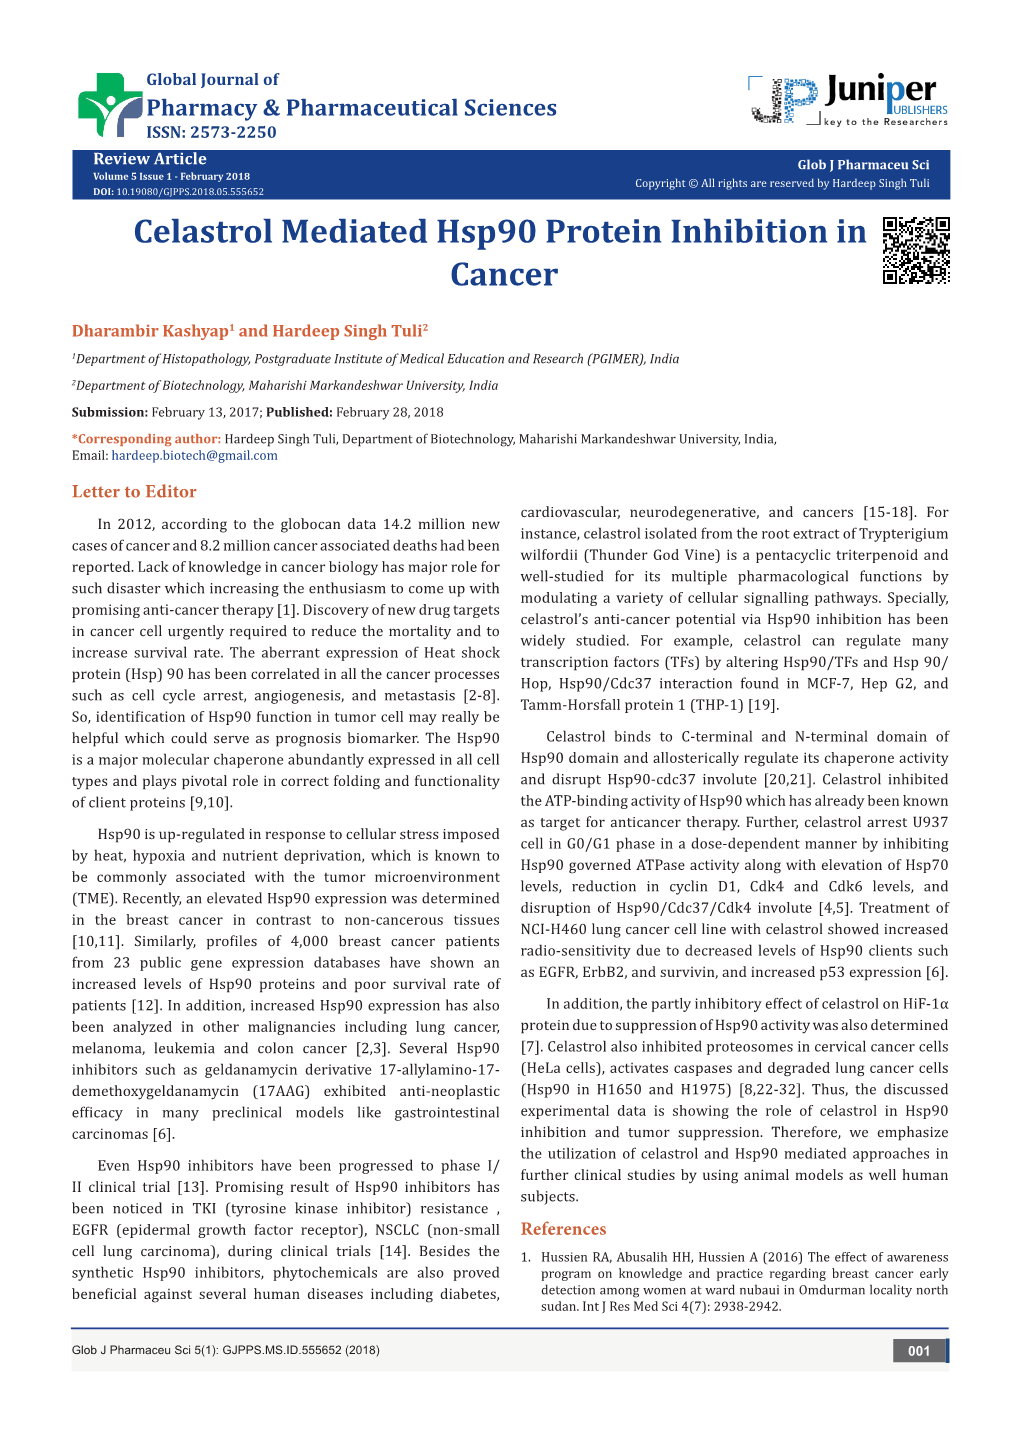 Celastrol Mediated Hsp90 Protein Inhibition in Cancer